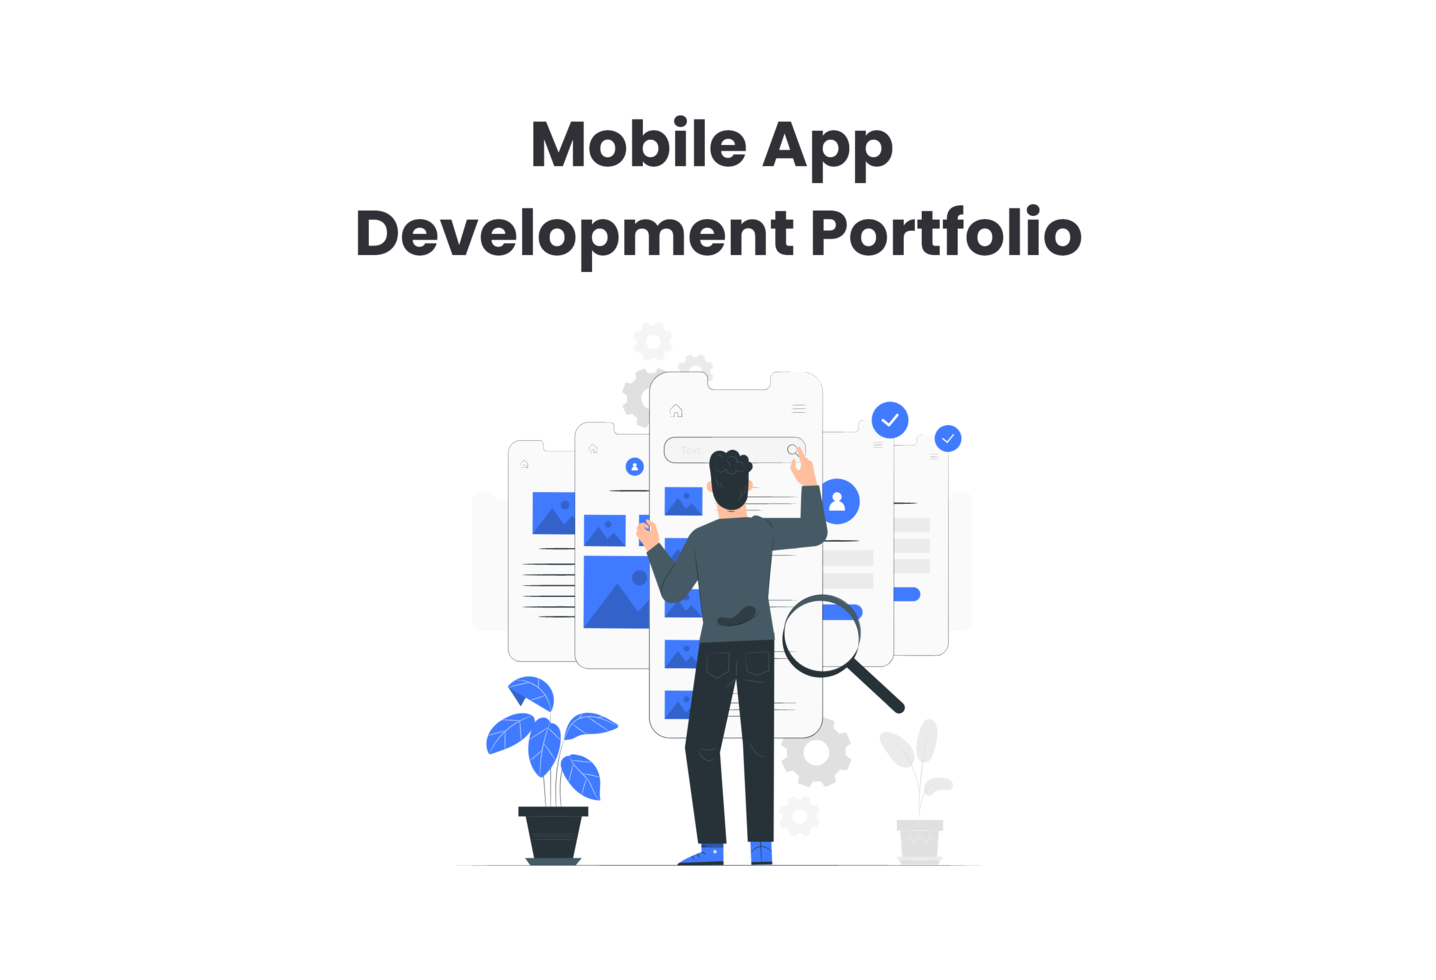 Mobile App Development Company Portfolio